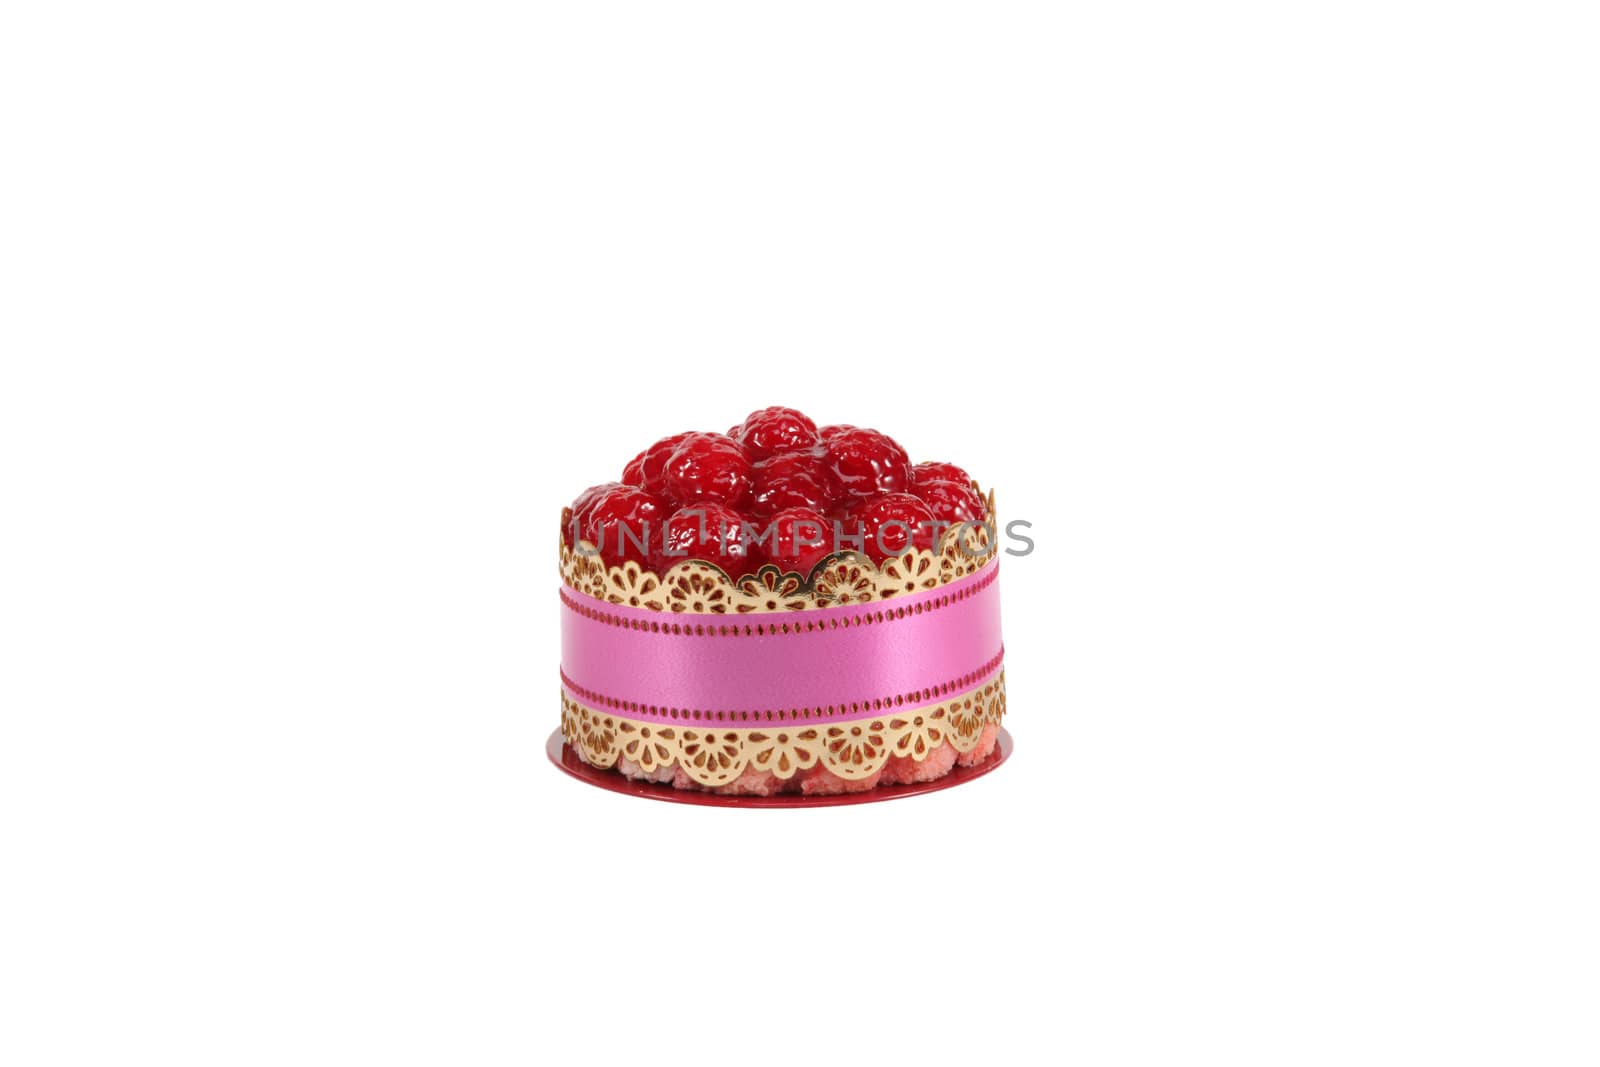 Individual strawberry cake